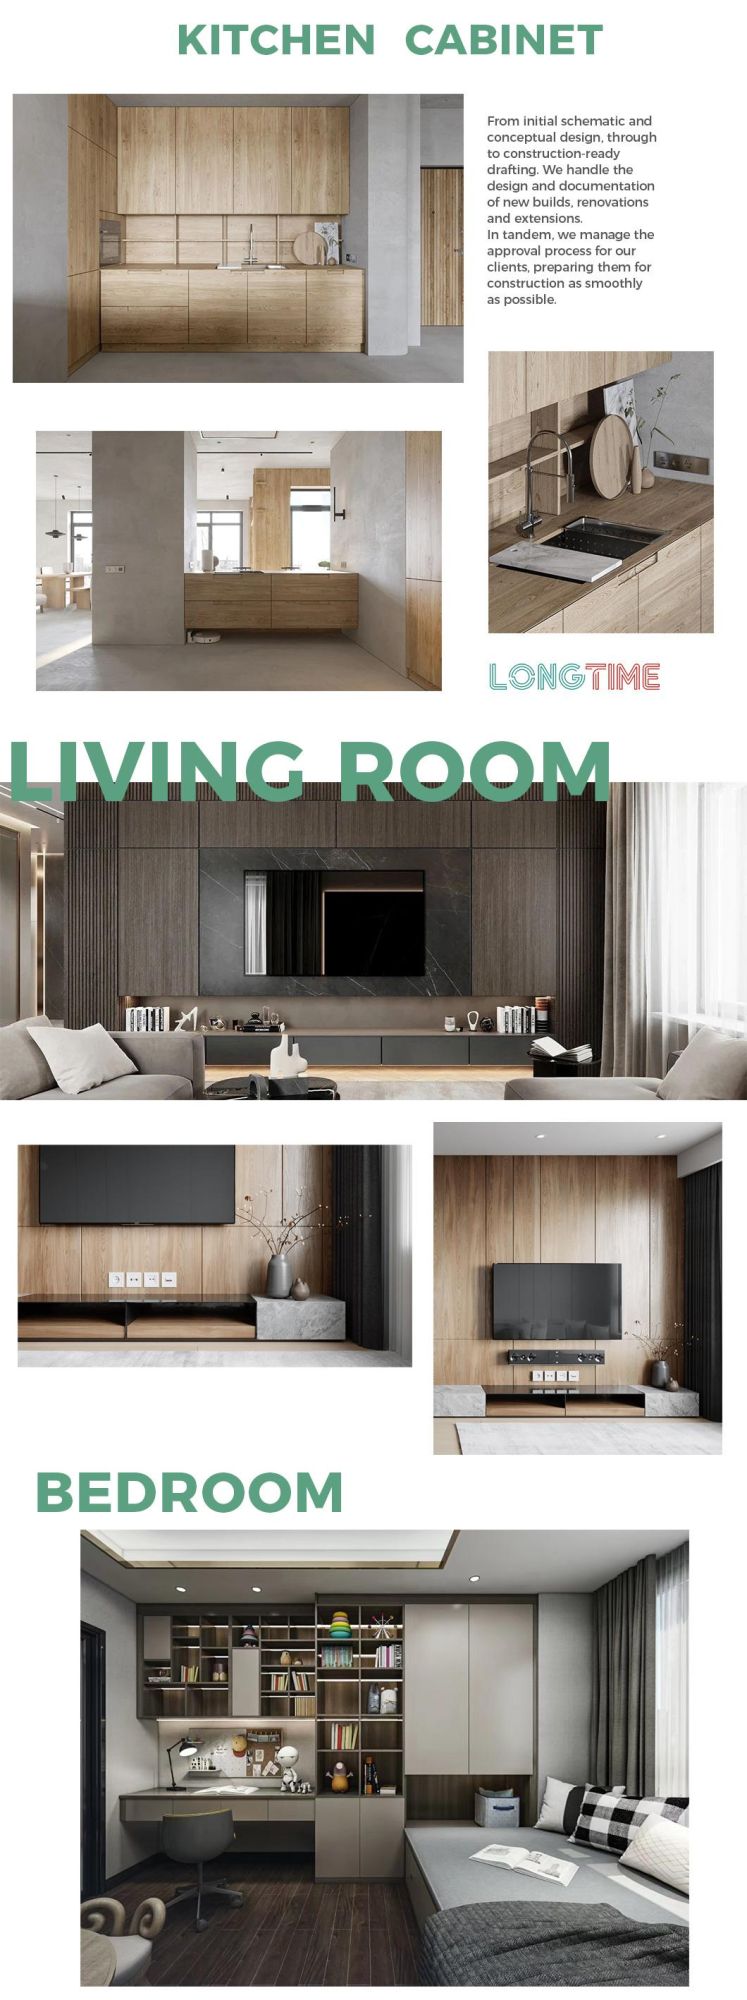 Living Room Furniture Nordic Furniture Classic Black Modern Wooden TV Stand Cabinet